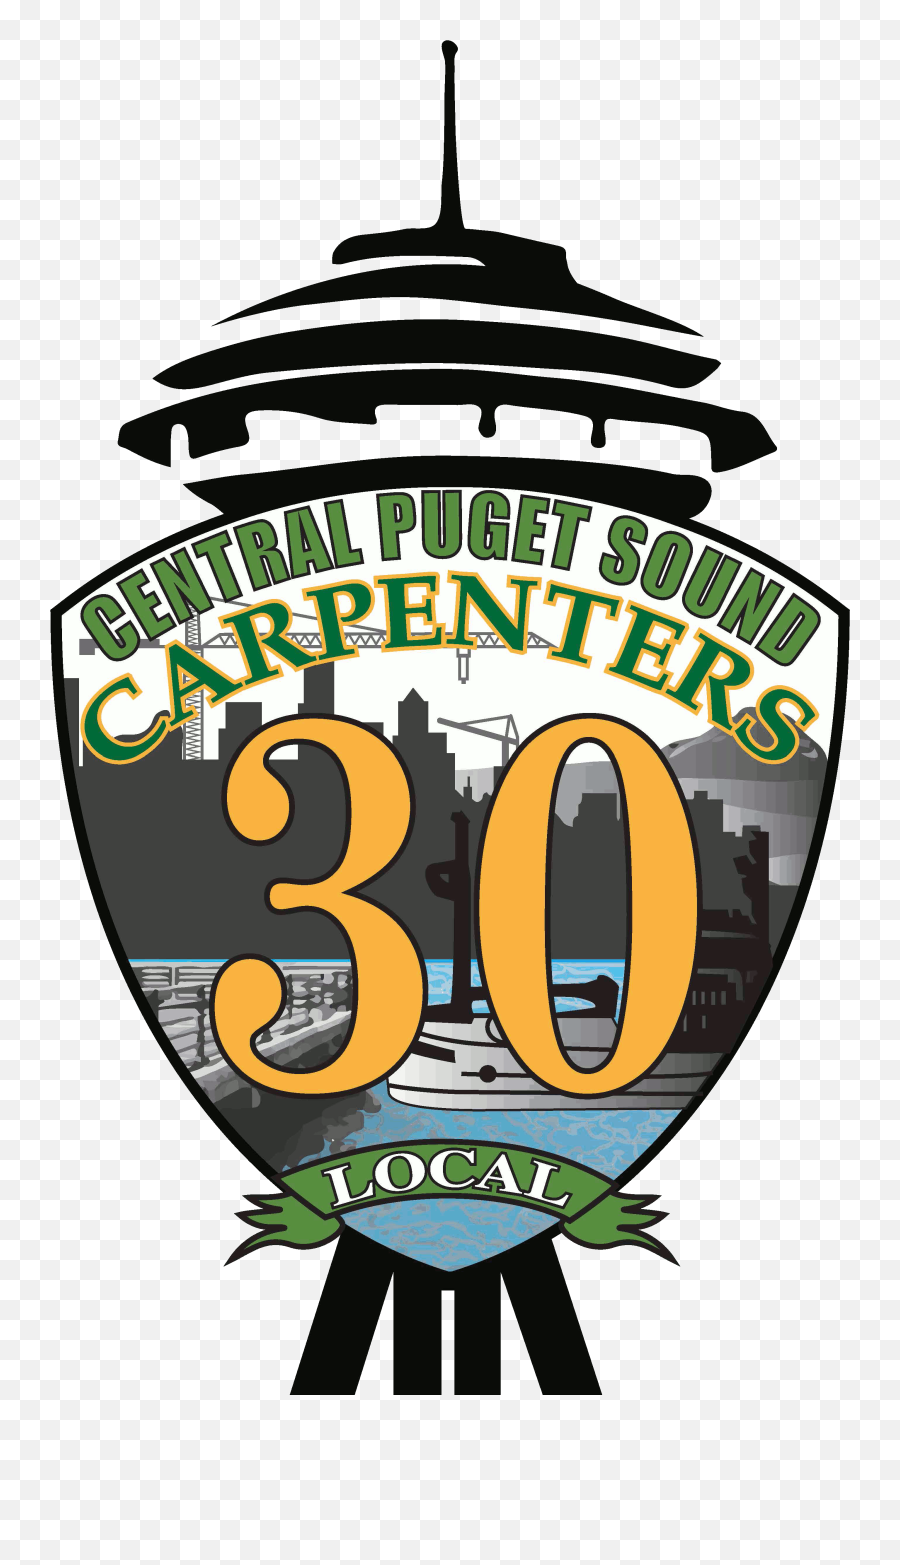 Carpenters Local 30 - Carpenters Local 30 Png,Carpenter Logo